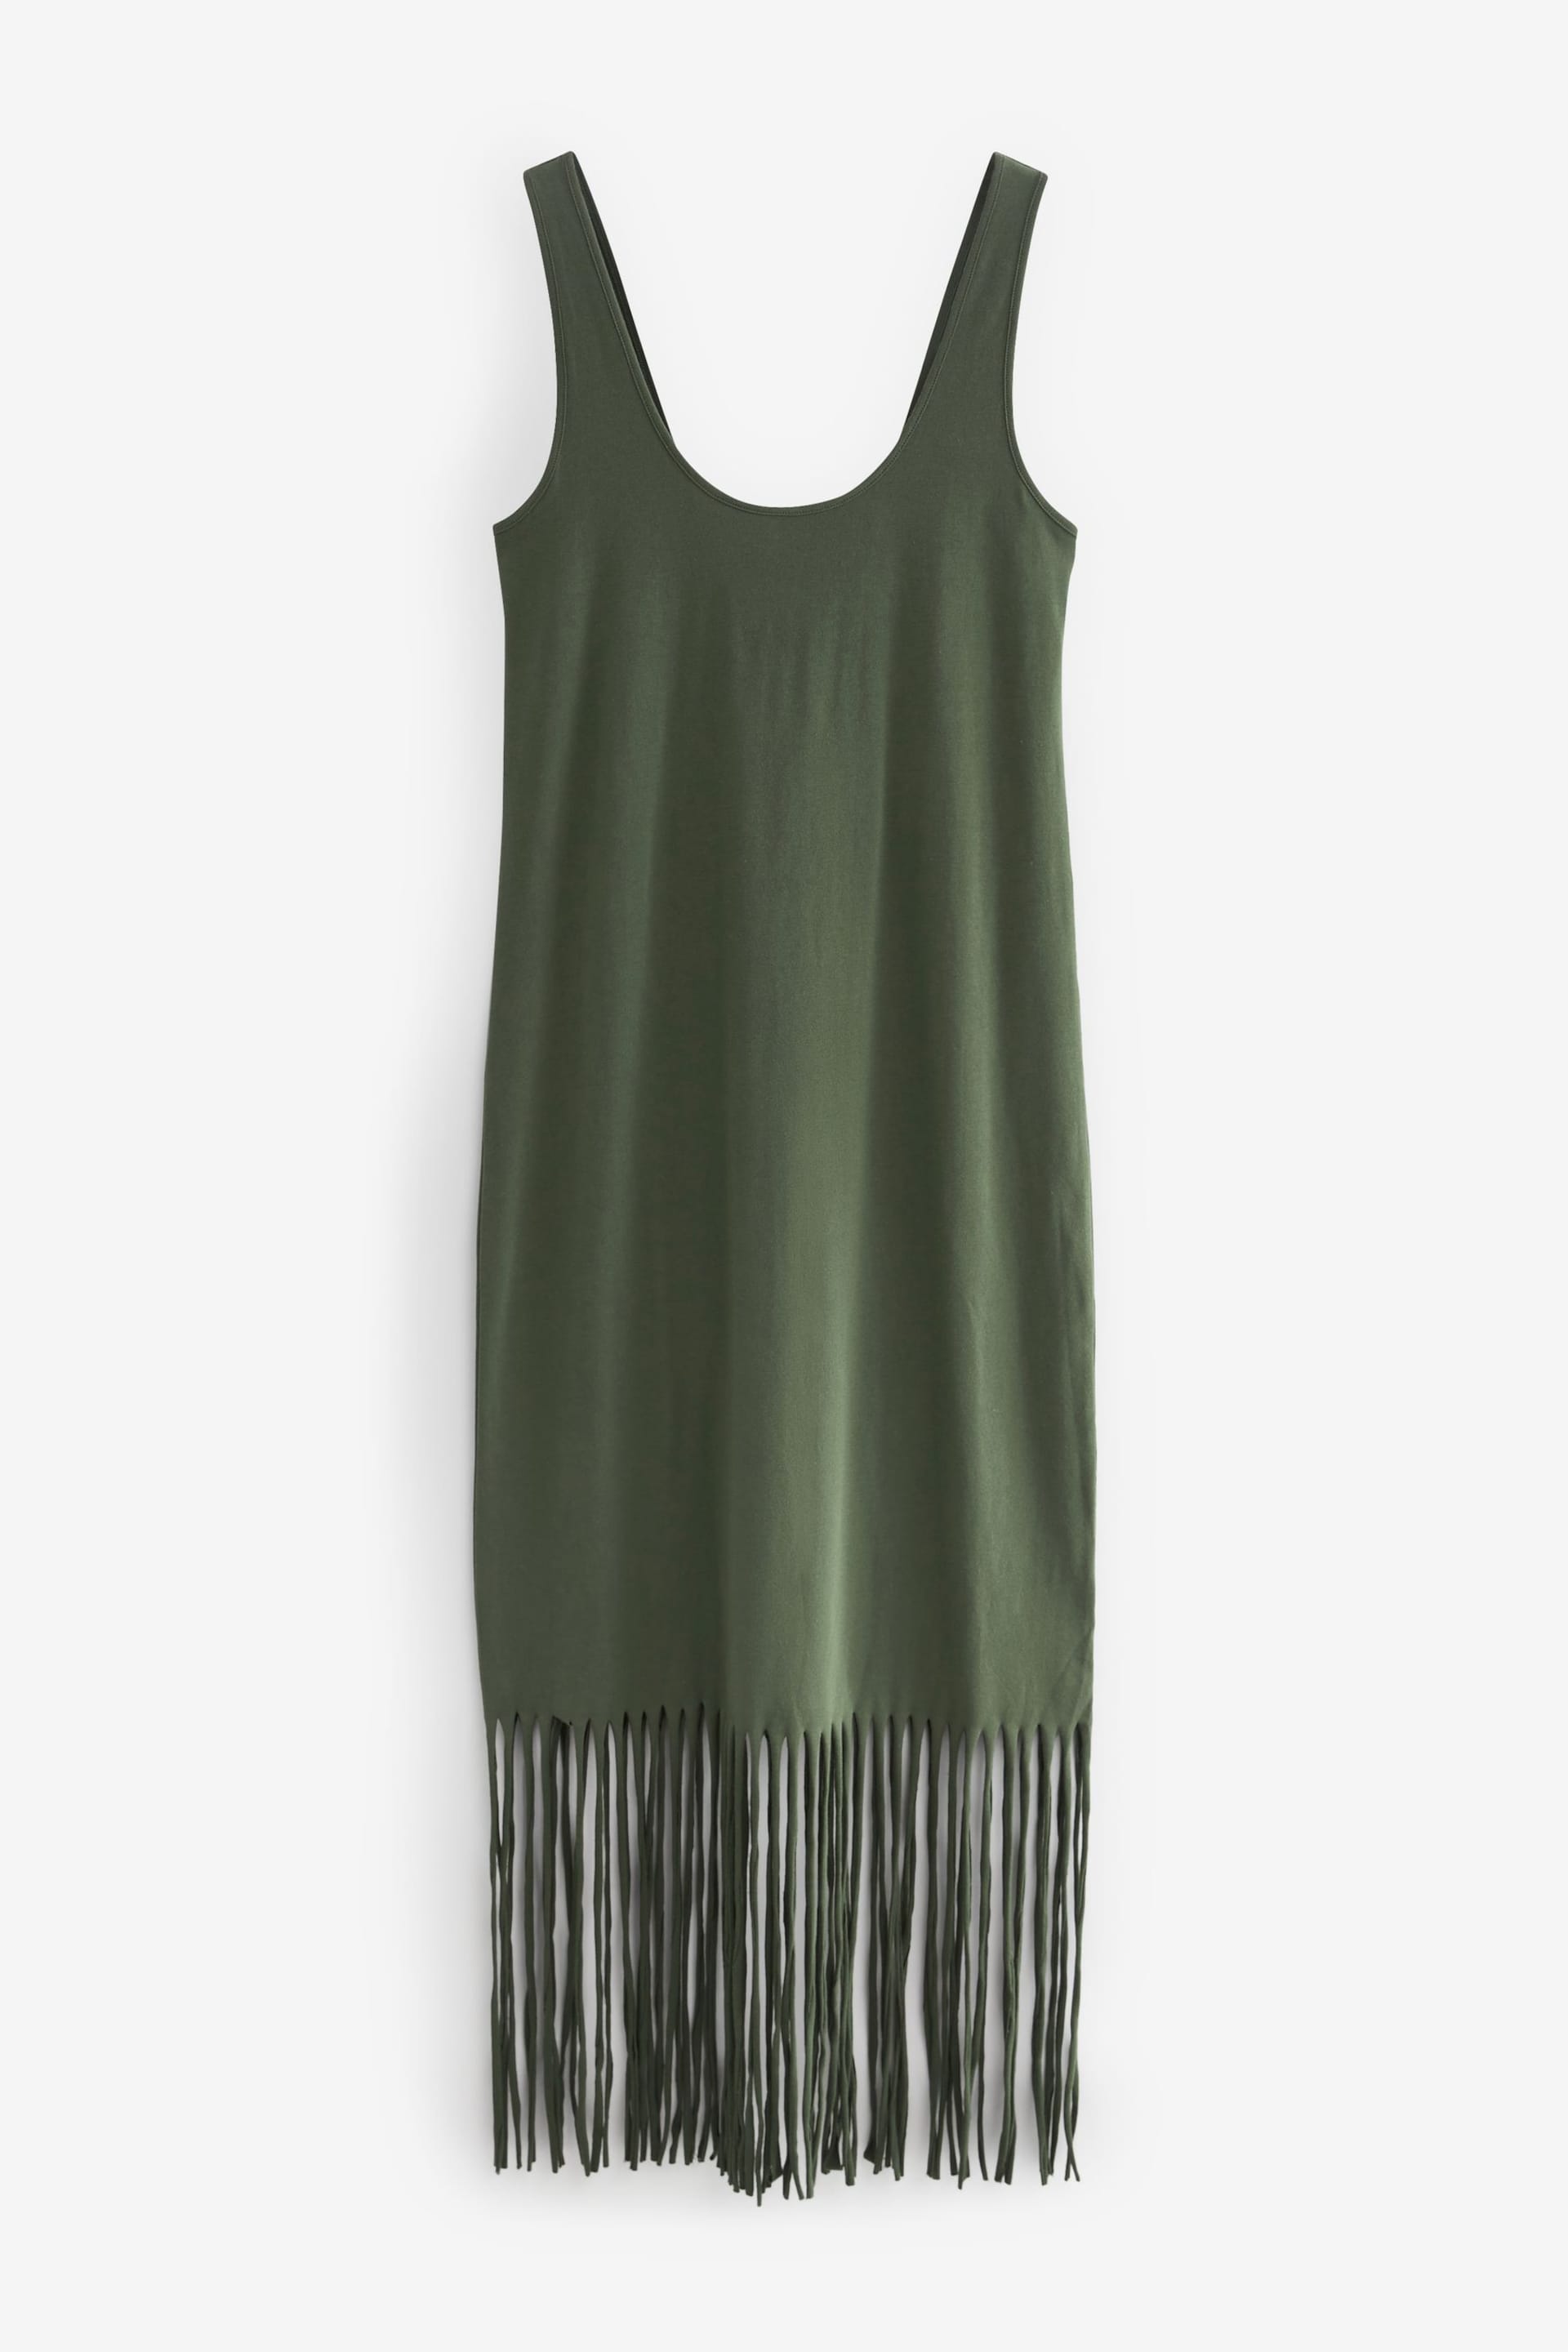 Khaki Green Fringe Summer Midi Dress - Image 5 of 6